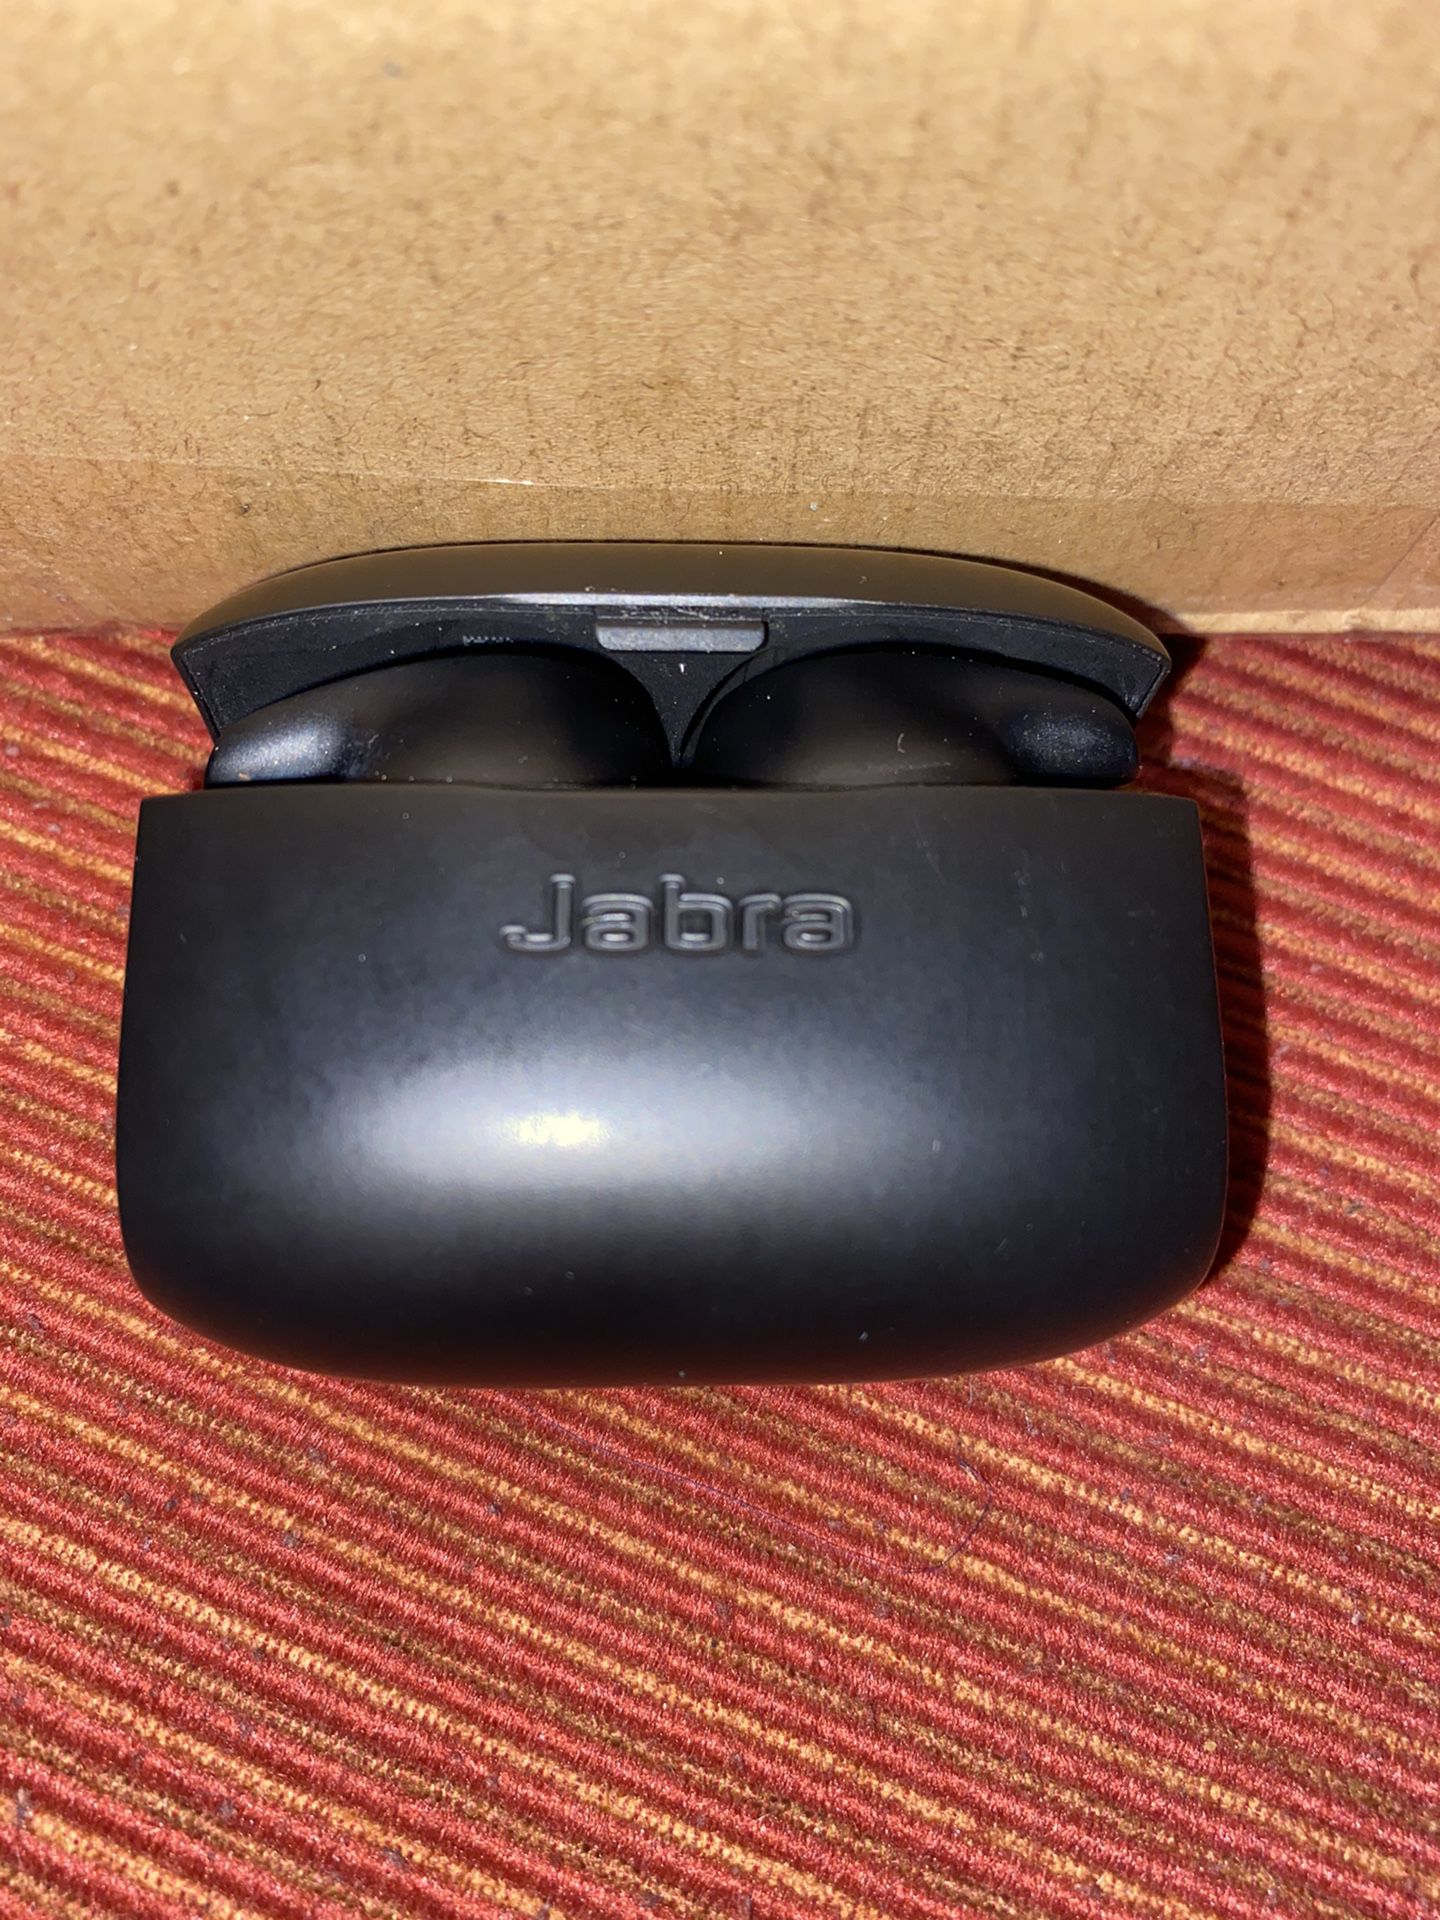 Jabra Wireless Headphones